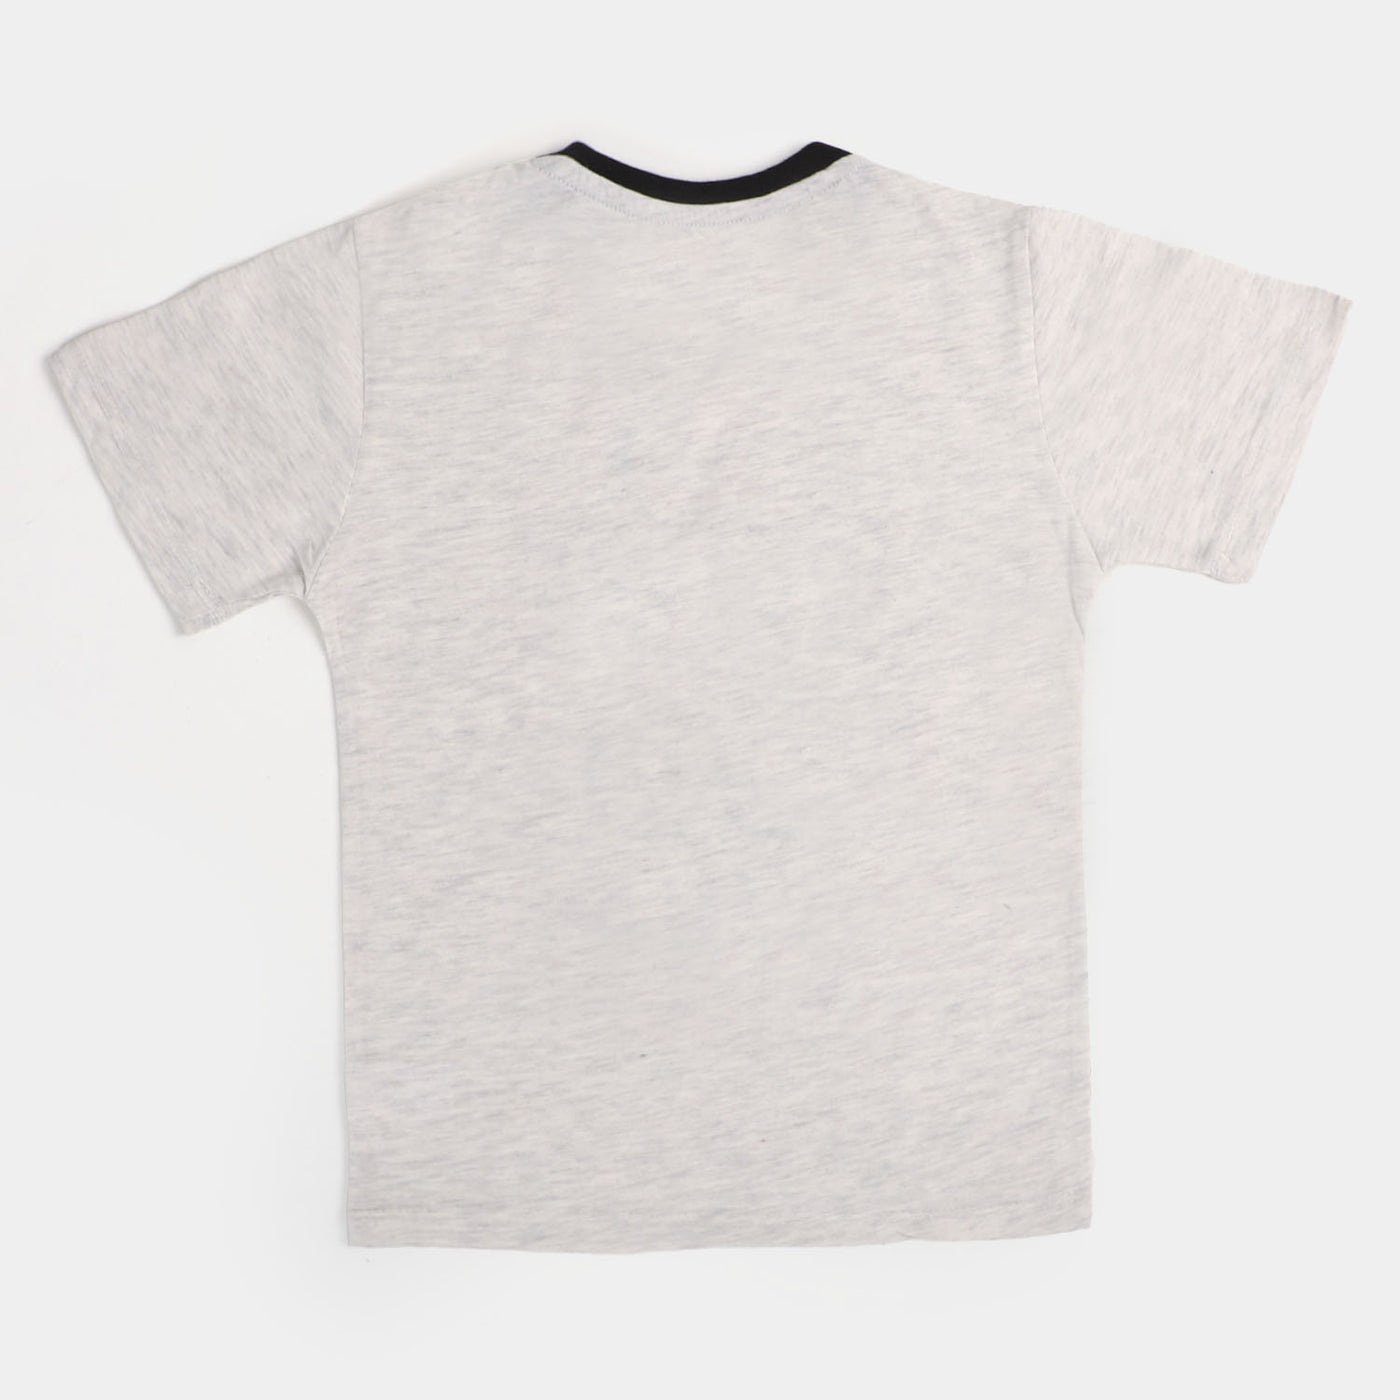 Boys Cotton T-Shirt Dare - Light Gray